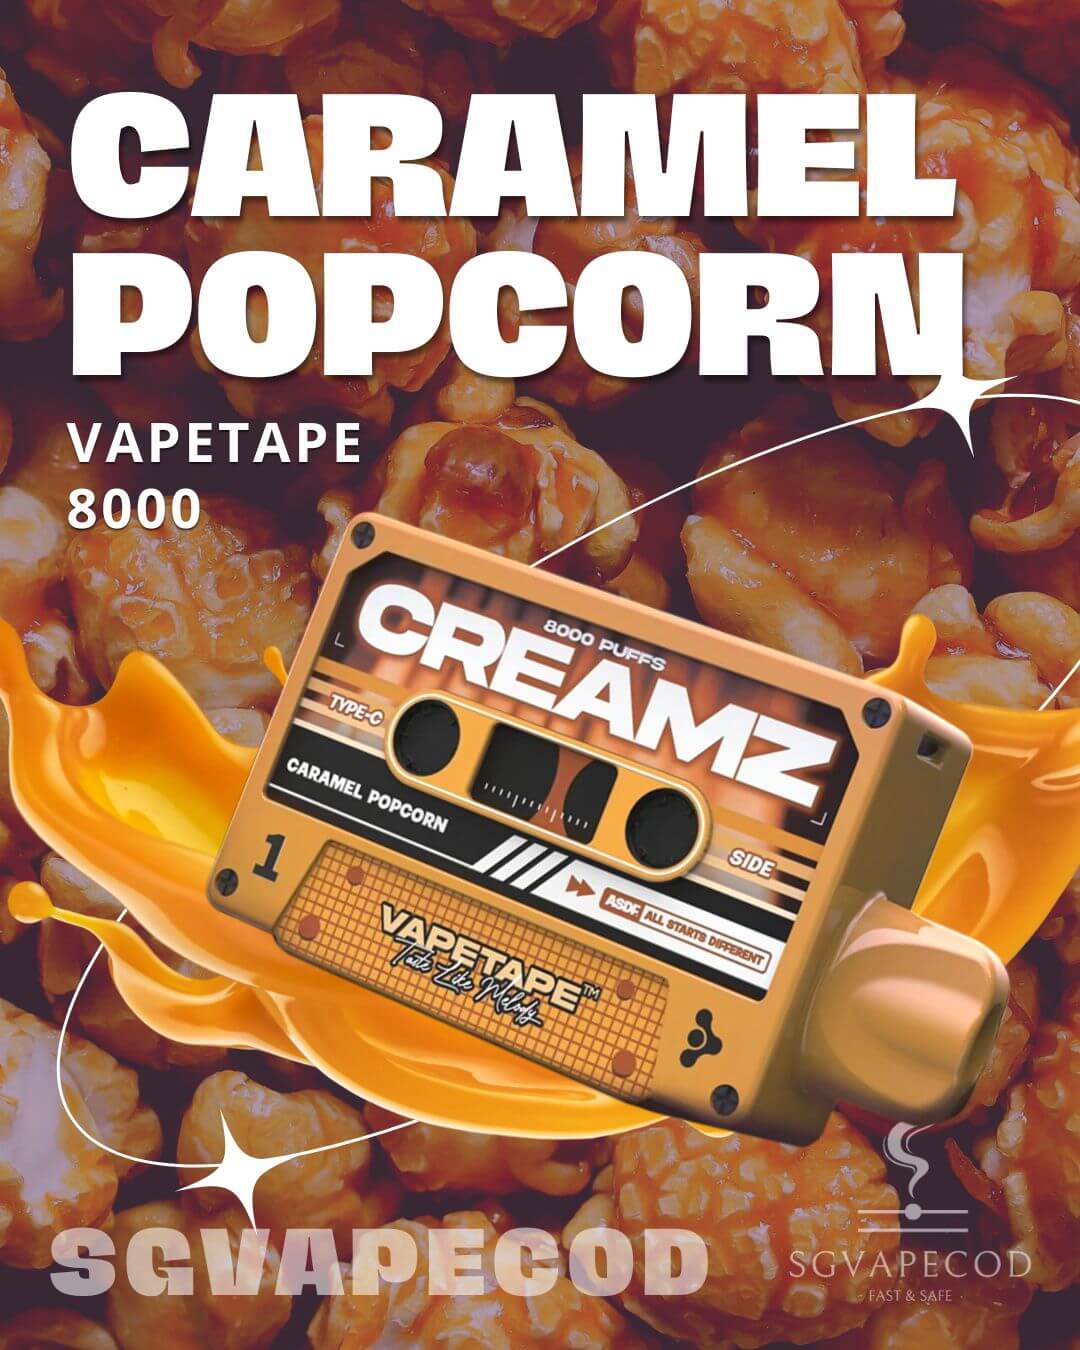 Vapetape-8000-Caramel-Popcorn-(SG VAPE COD)